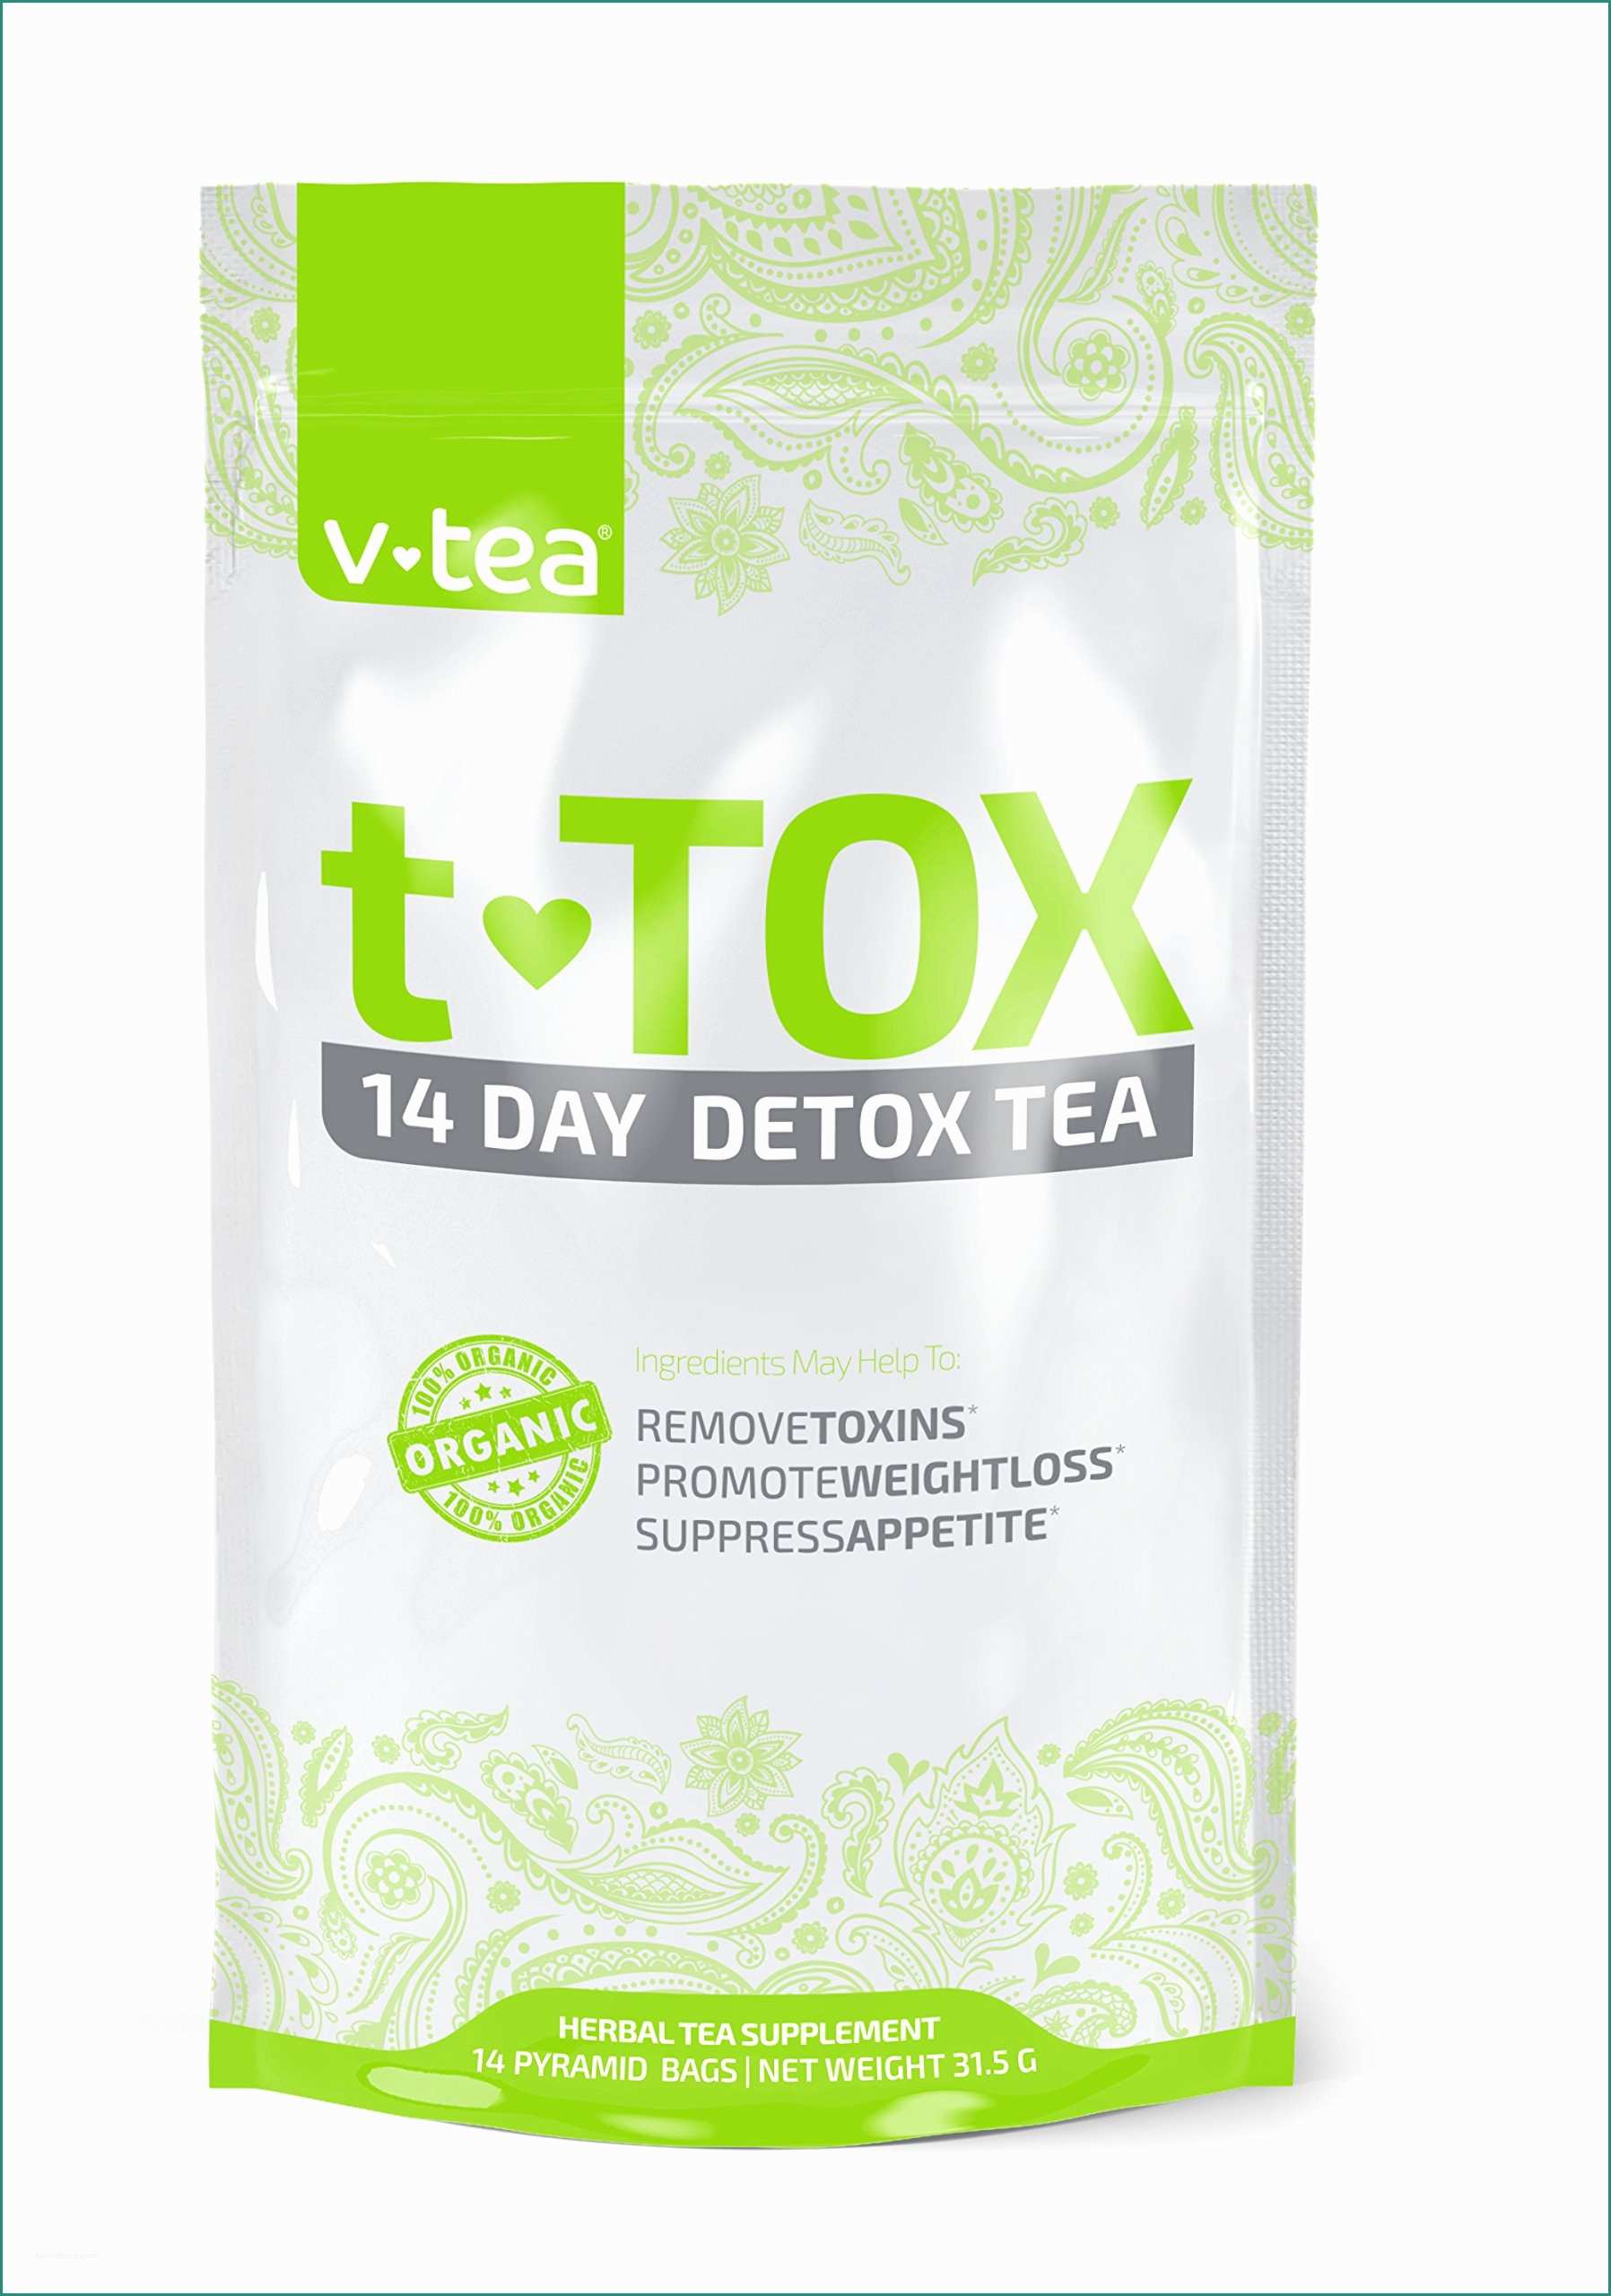 Rimuovere Sweet Page E Amazon V Tea Teatox 14 Day Detox Tea Cleanse Boost Energy